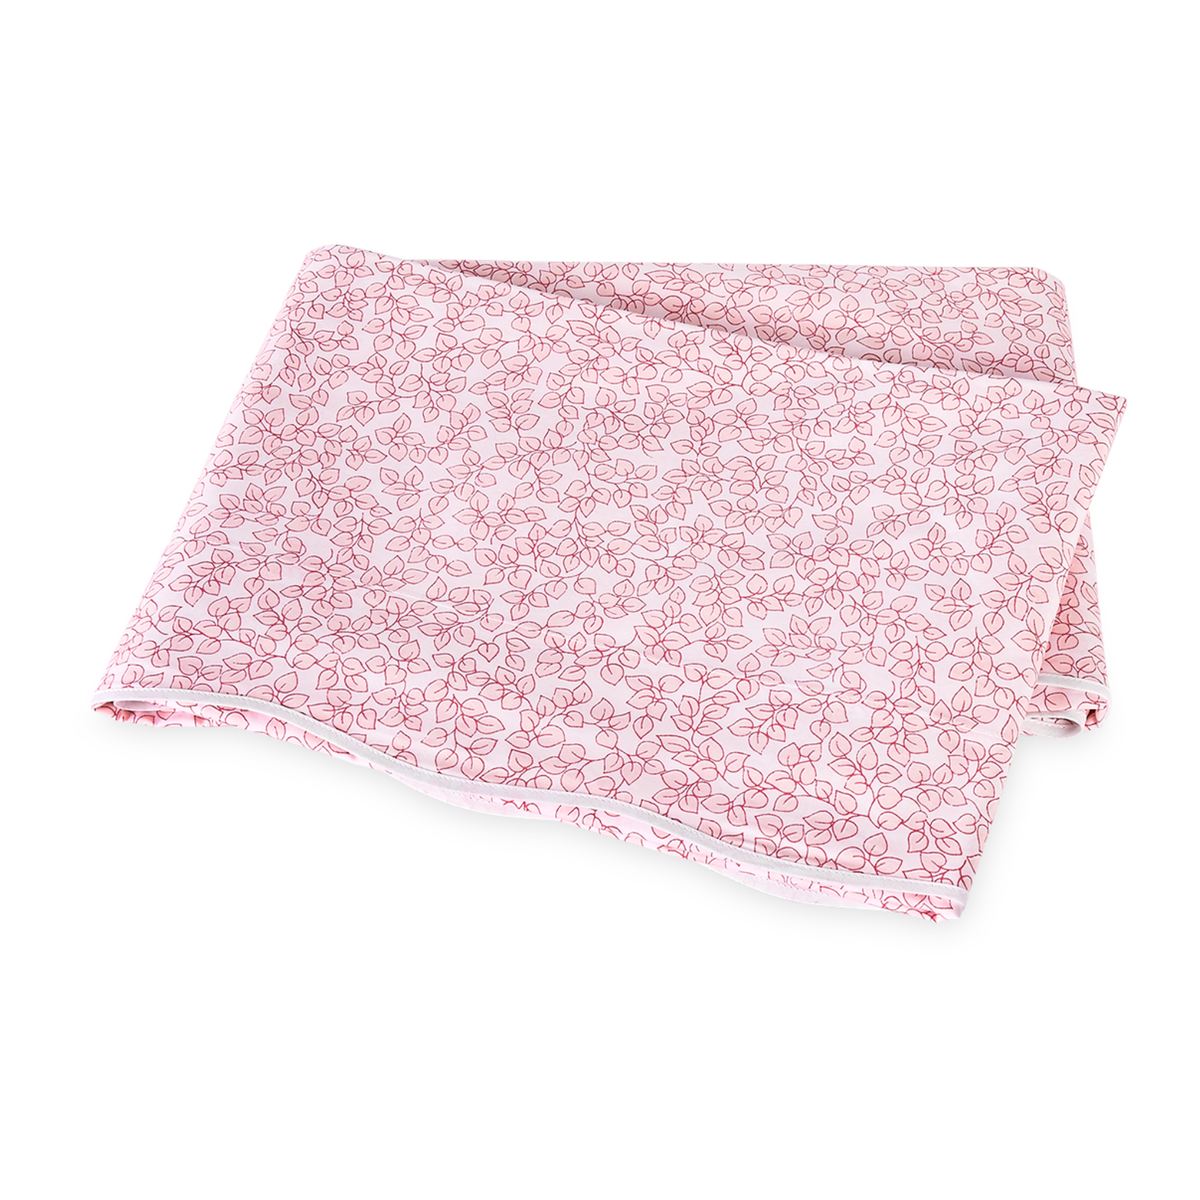 Folded Flat Sheet of Matouk Margot Bedding in Blush Color